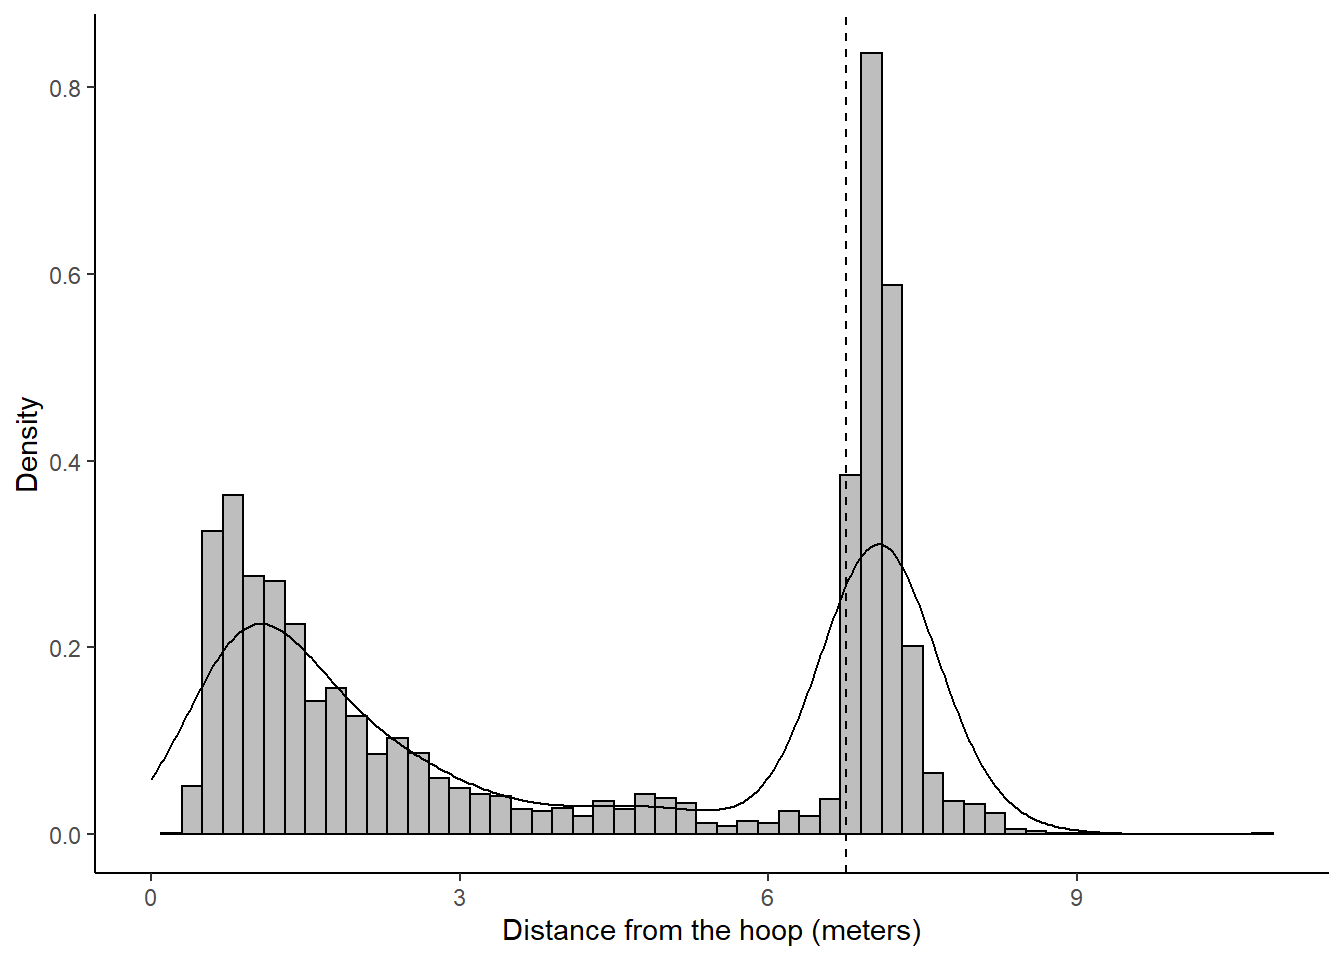 One-dimensional density plot for shot distance